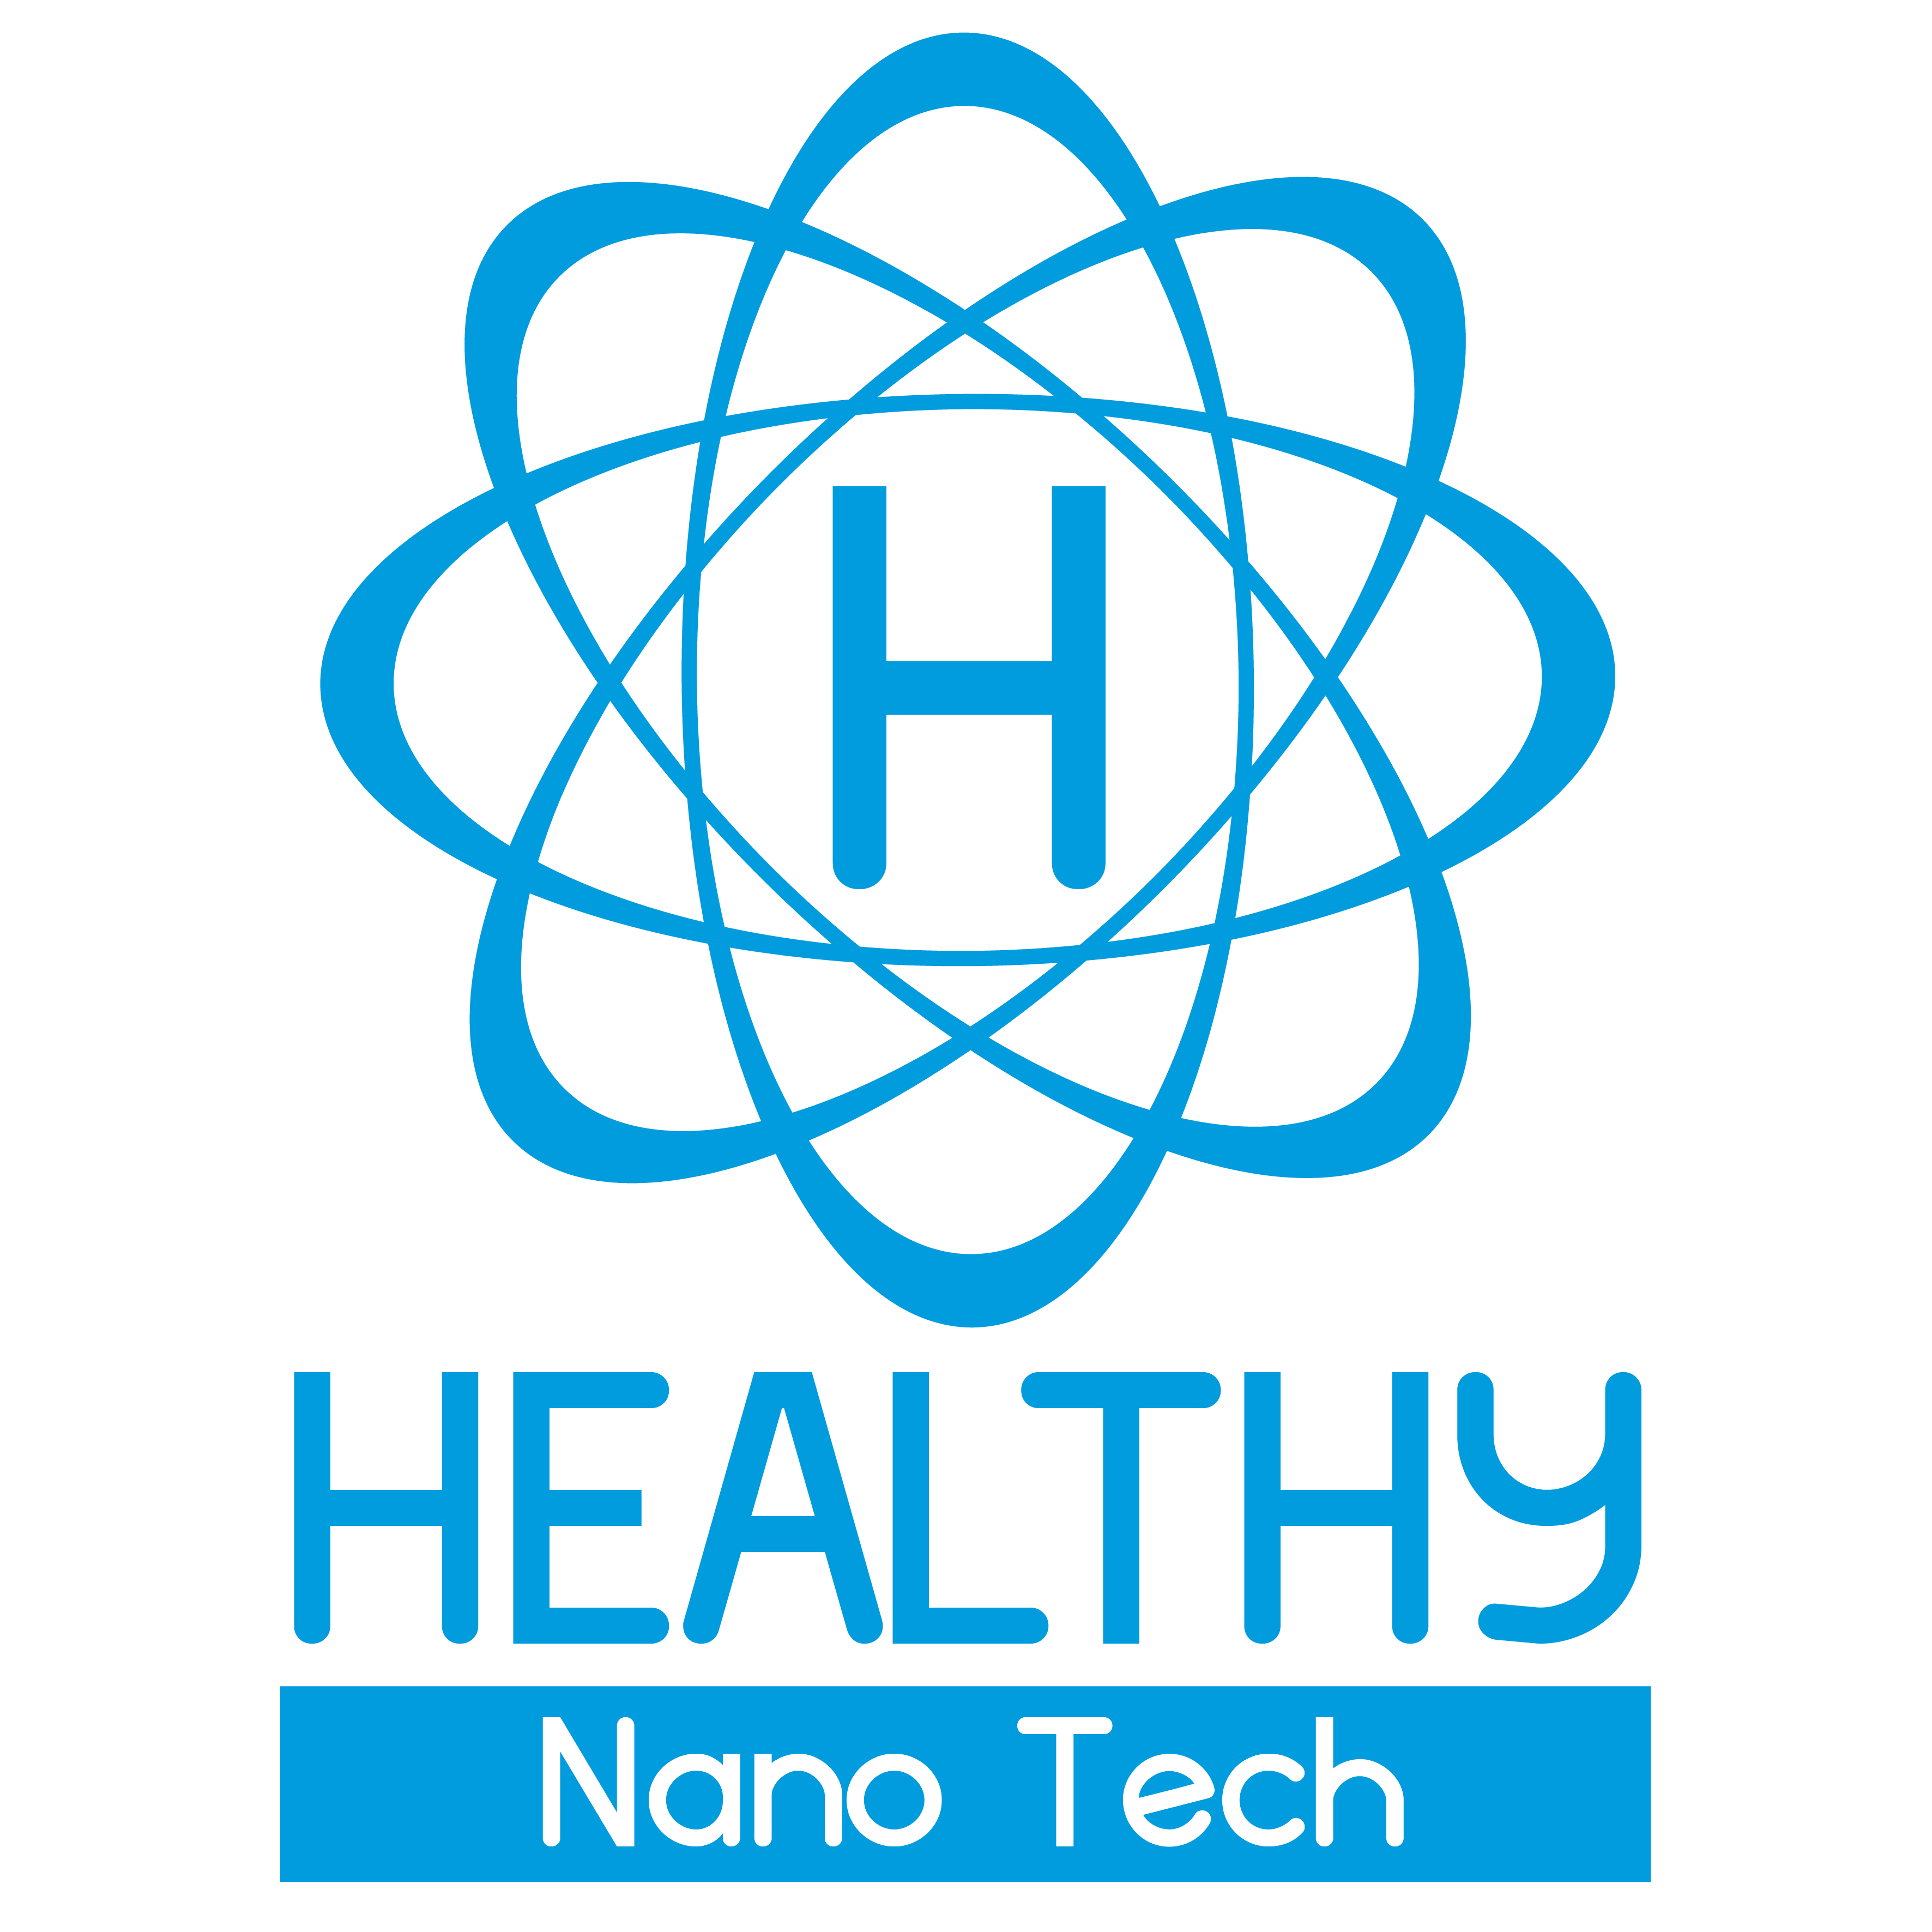 Healthy Nano Tech